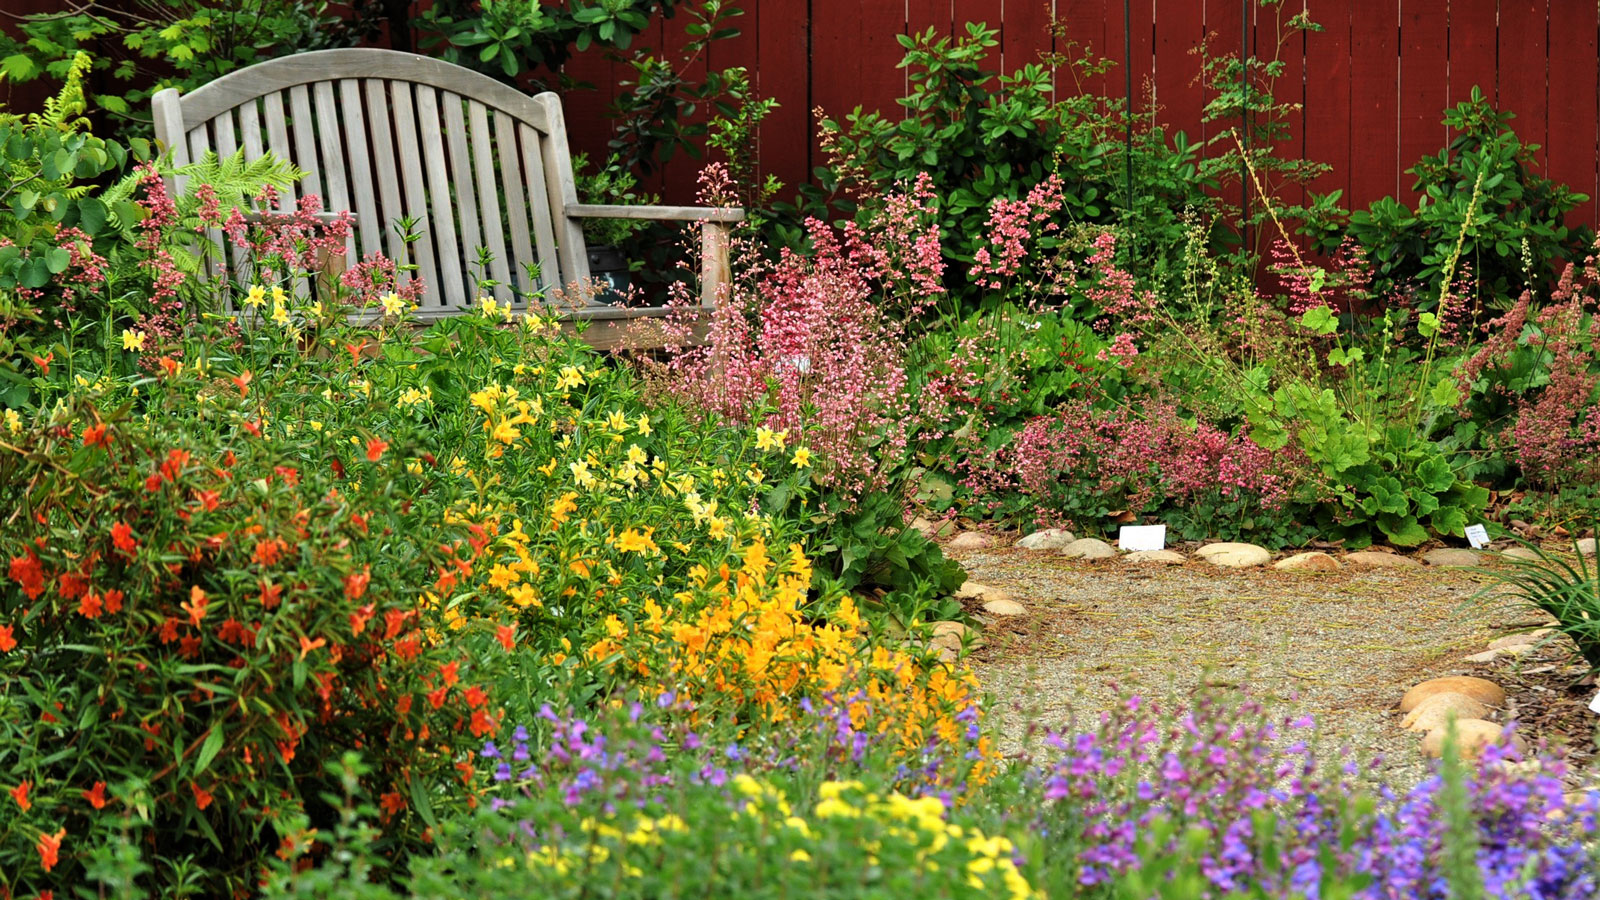 Guide to planting a pollinator-friendly garden - Environment America